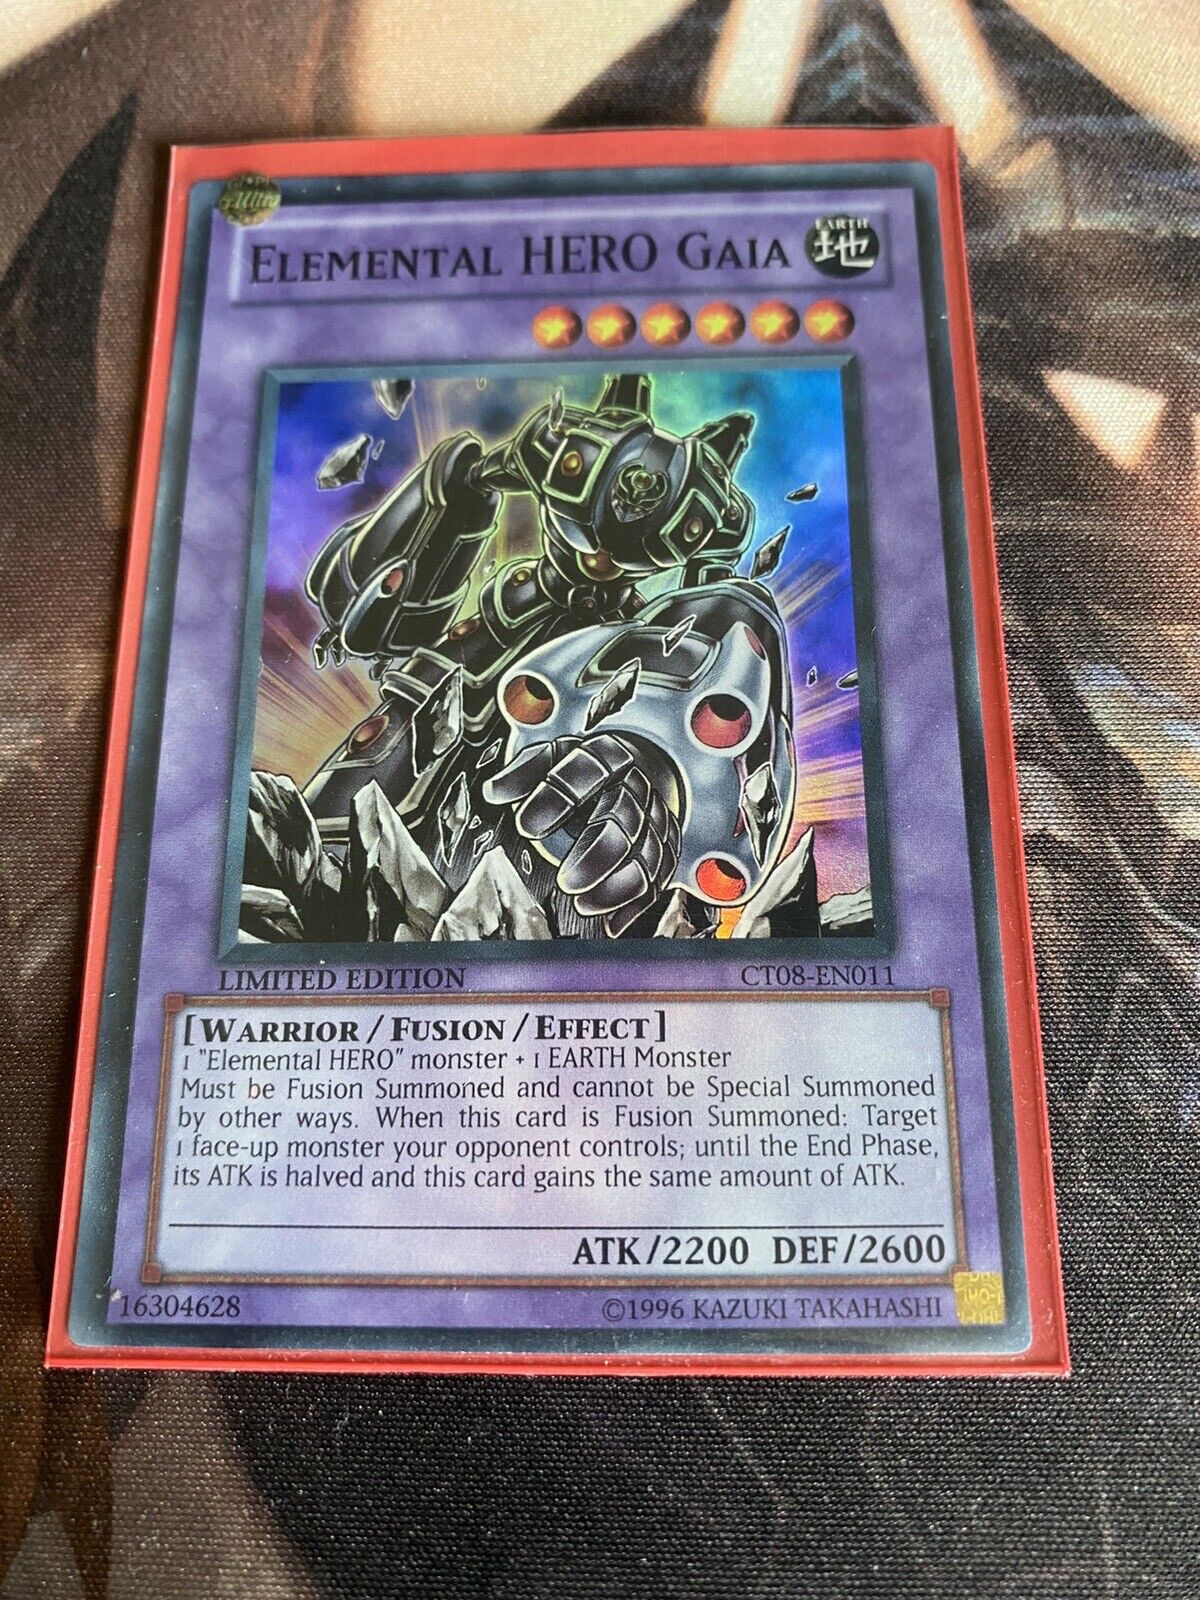 CT08-EN011 Elemental Hero Gaia Super Rare Limited Edition NM Yugioh Card